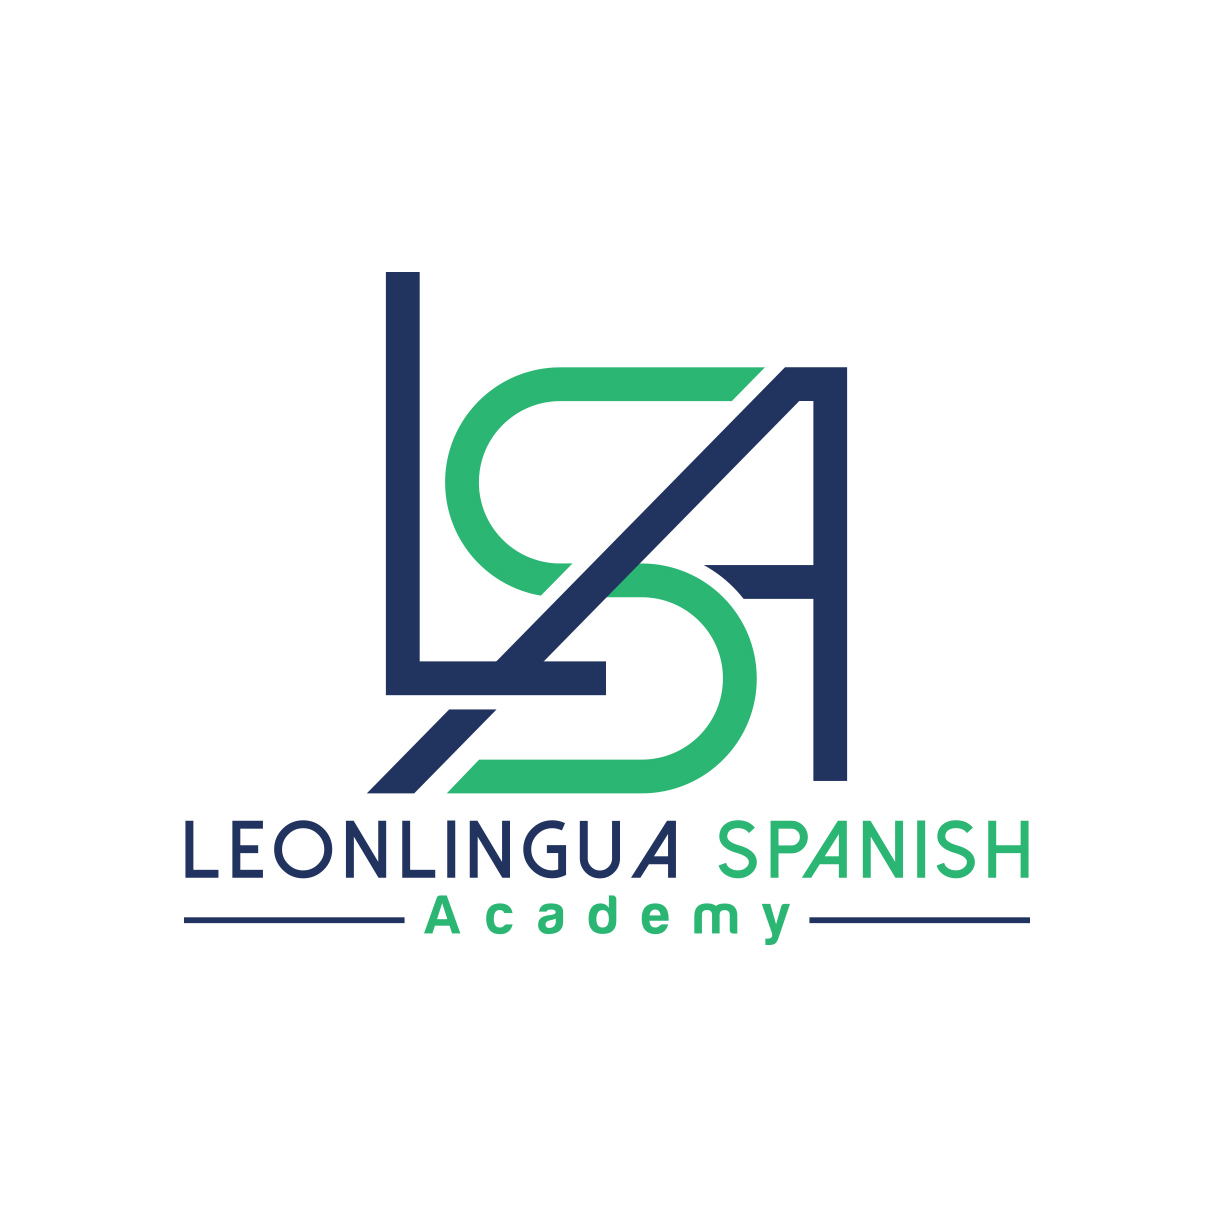 LSA-Hablaonline logo